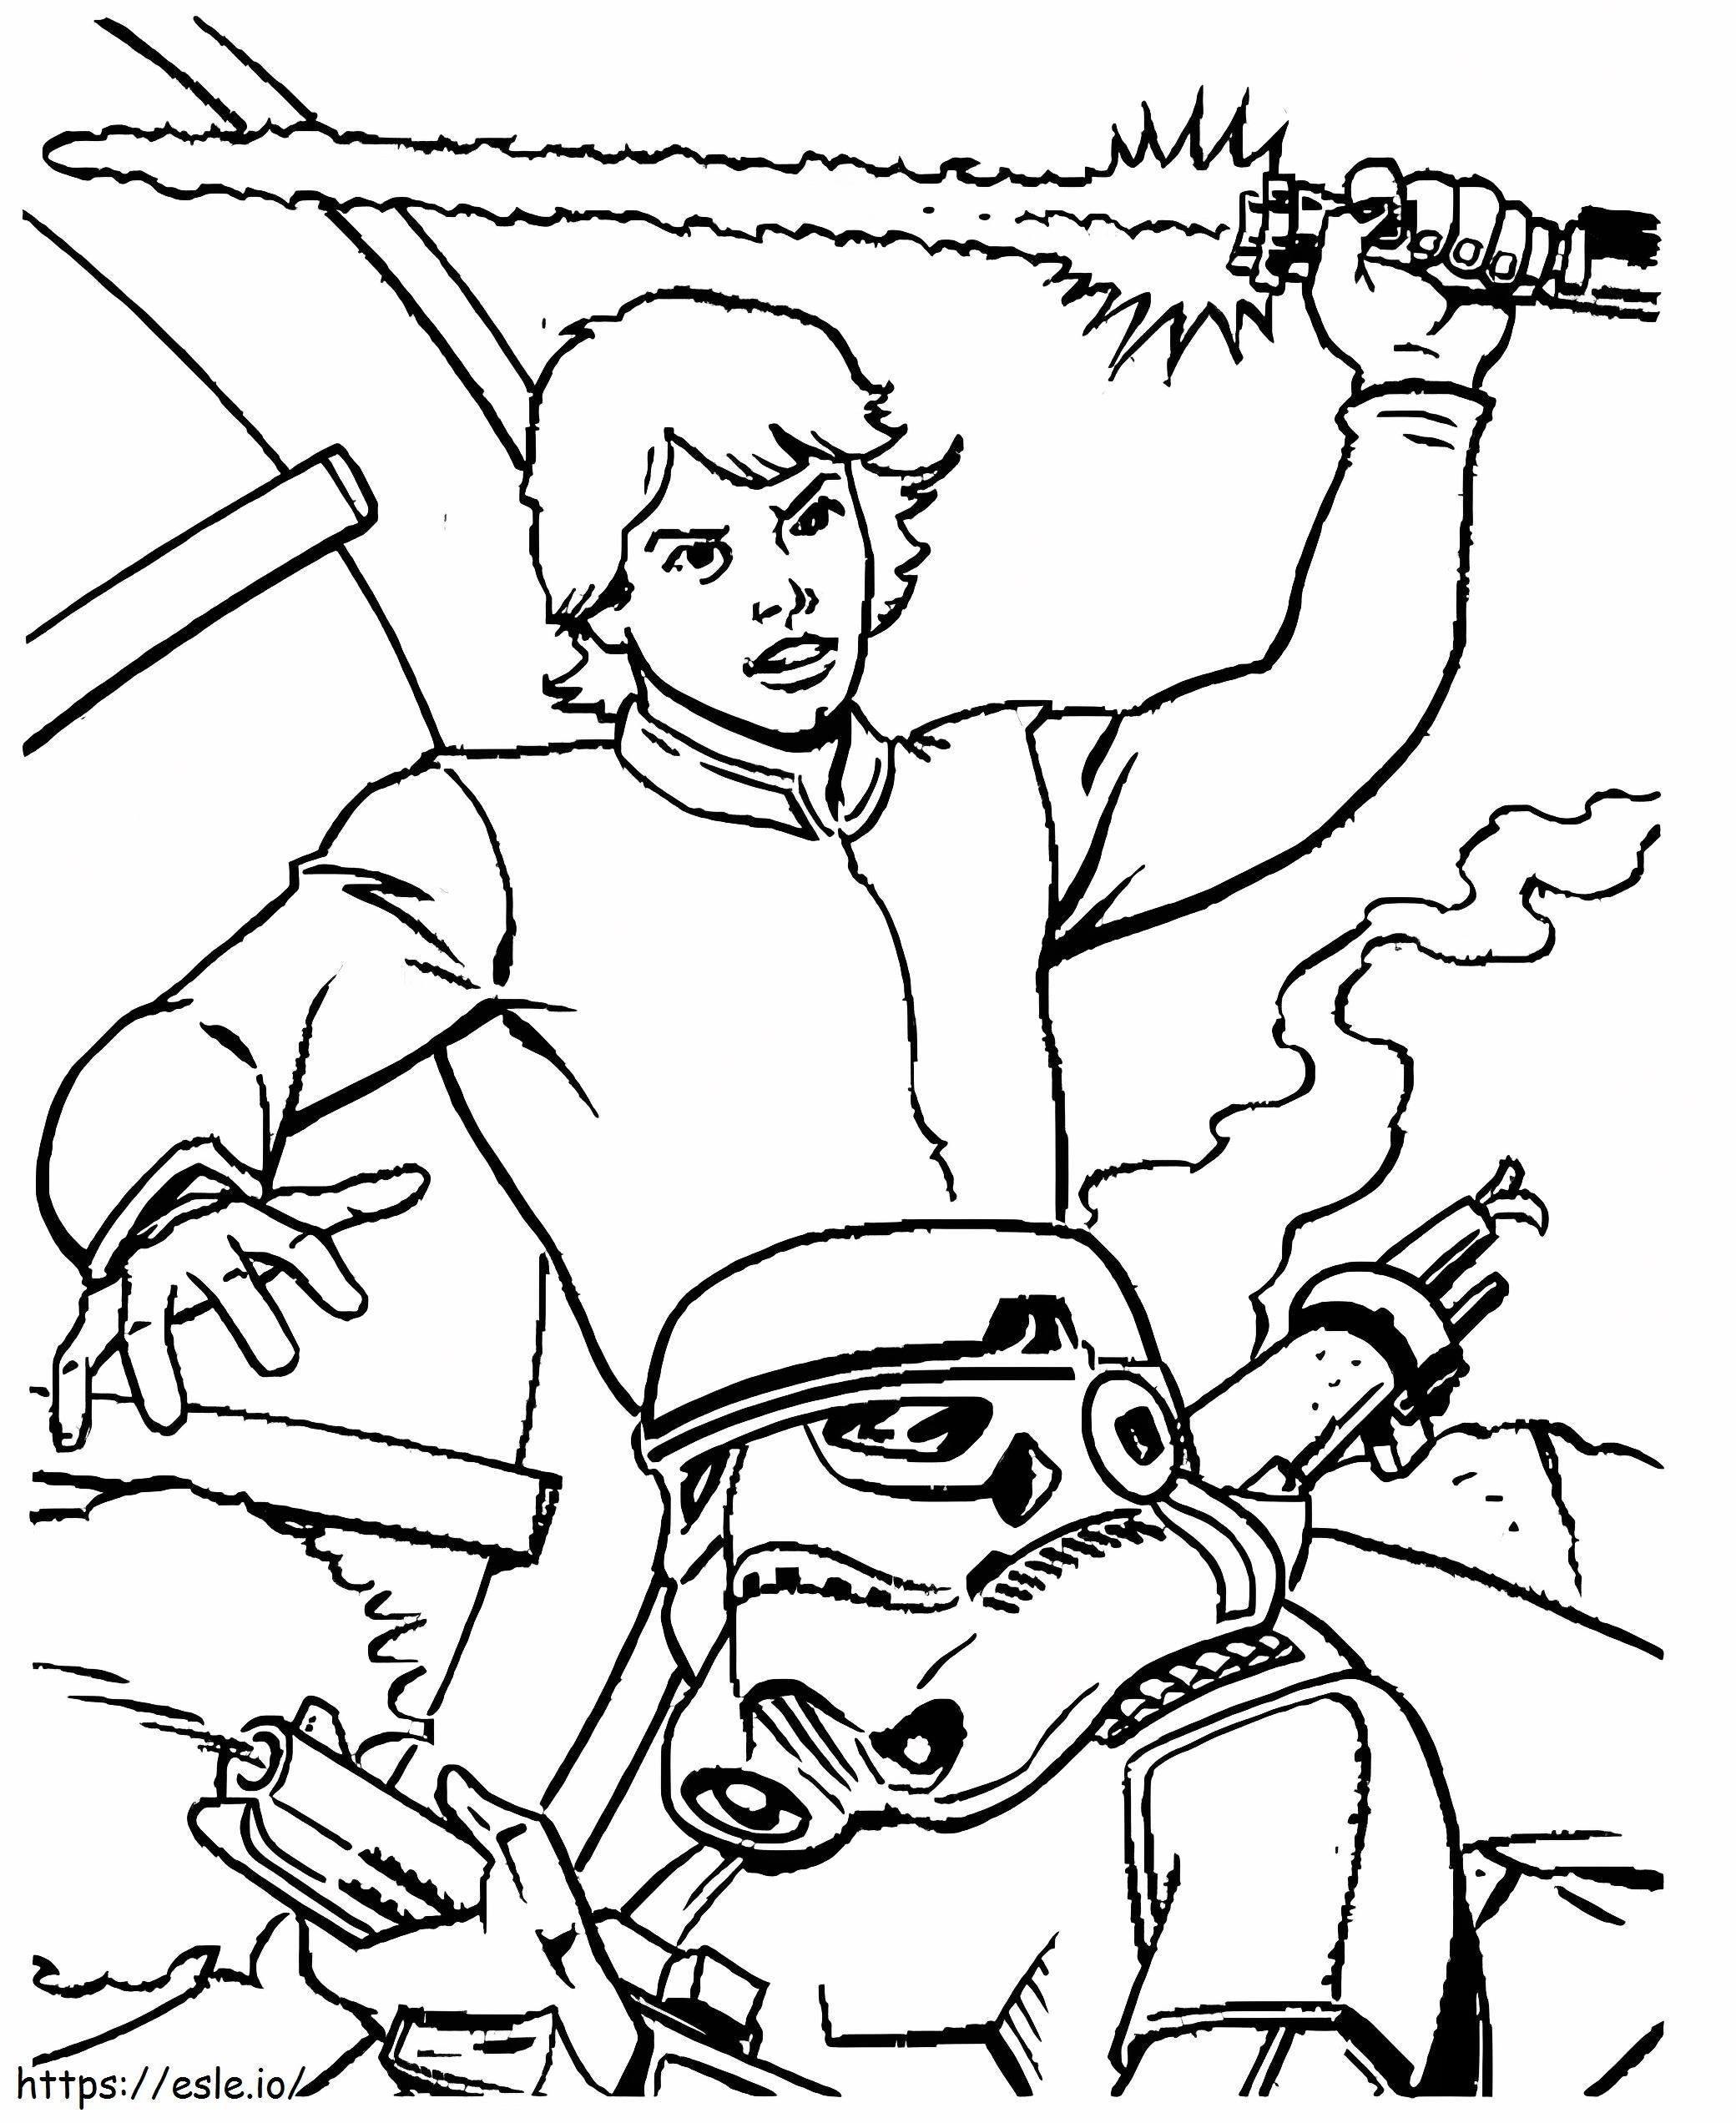 Luke Skywalker está lutando para colorir